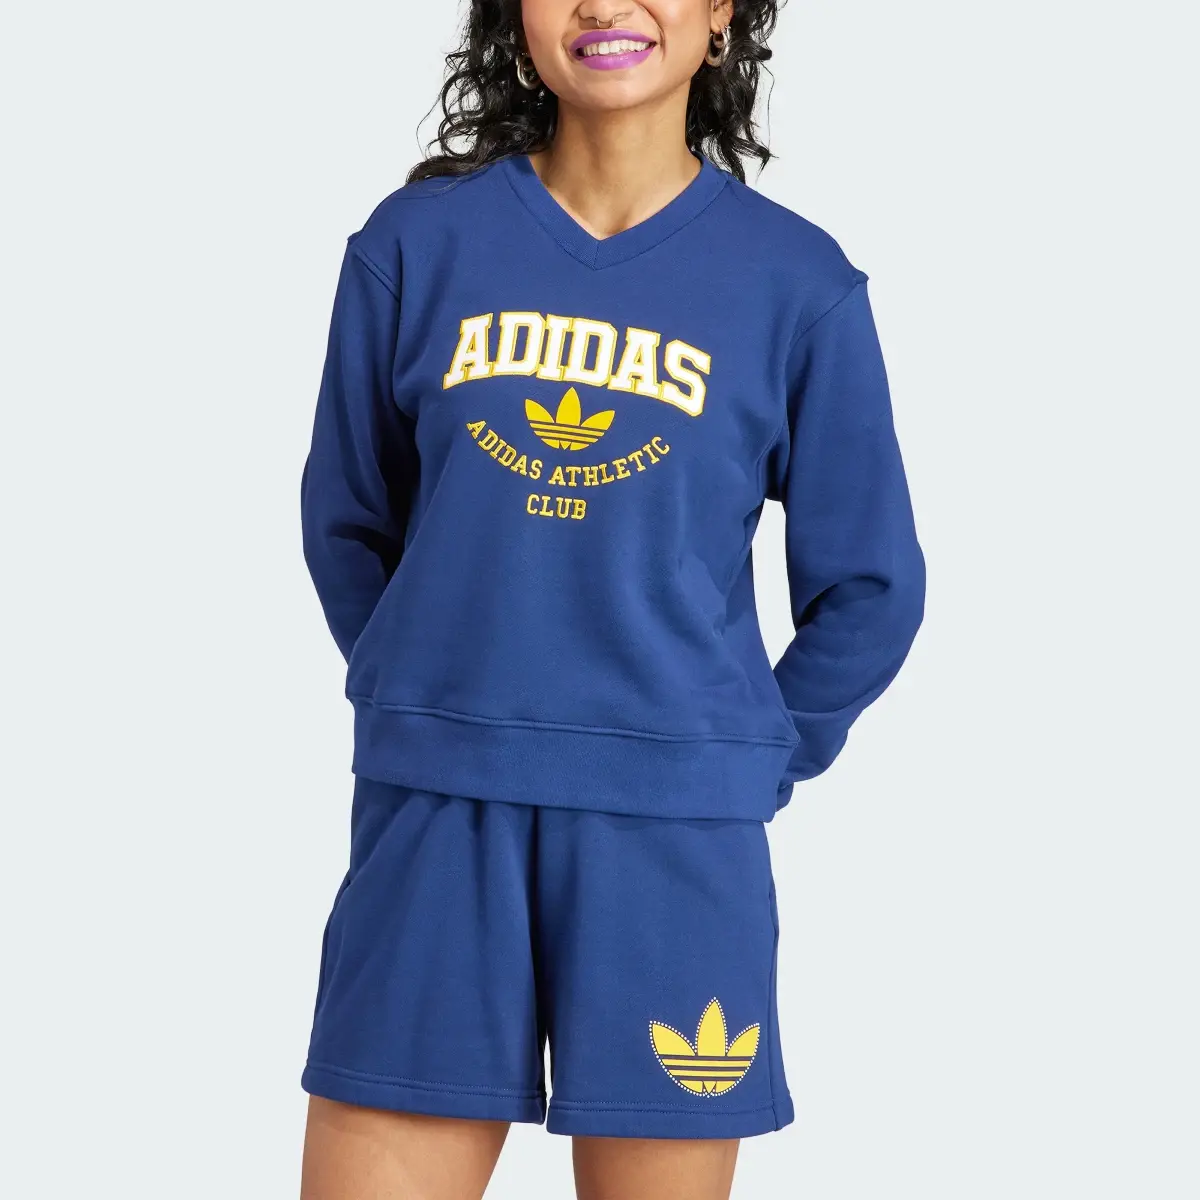 Adidas College Graphic Sweatshirt. 1